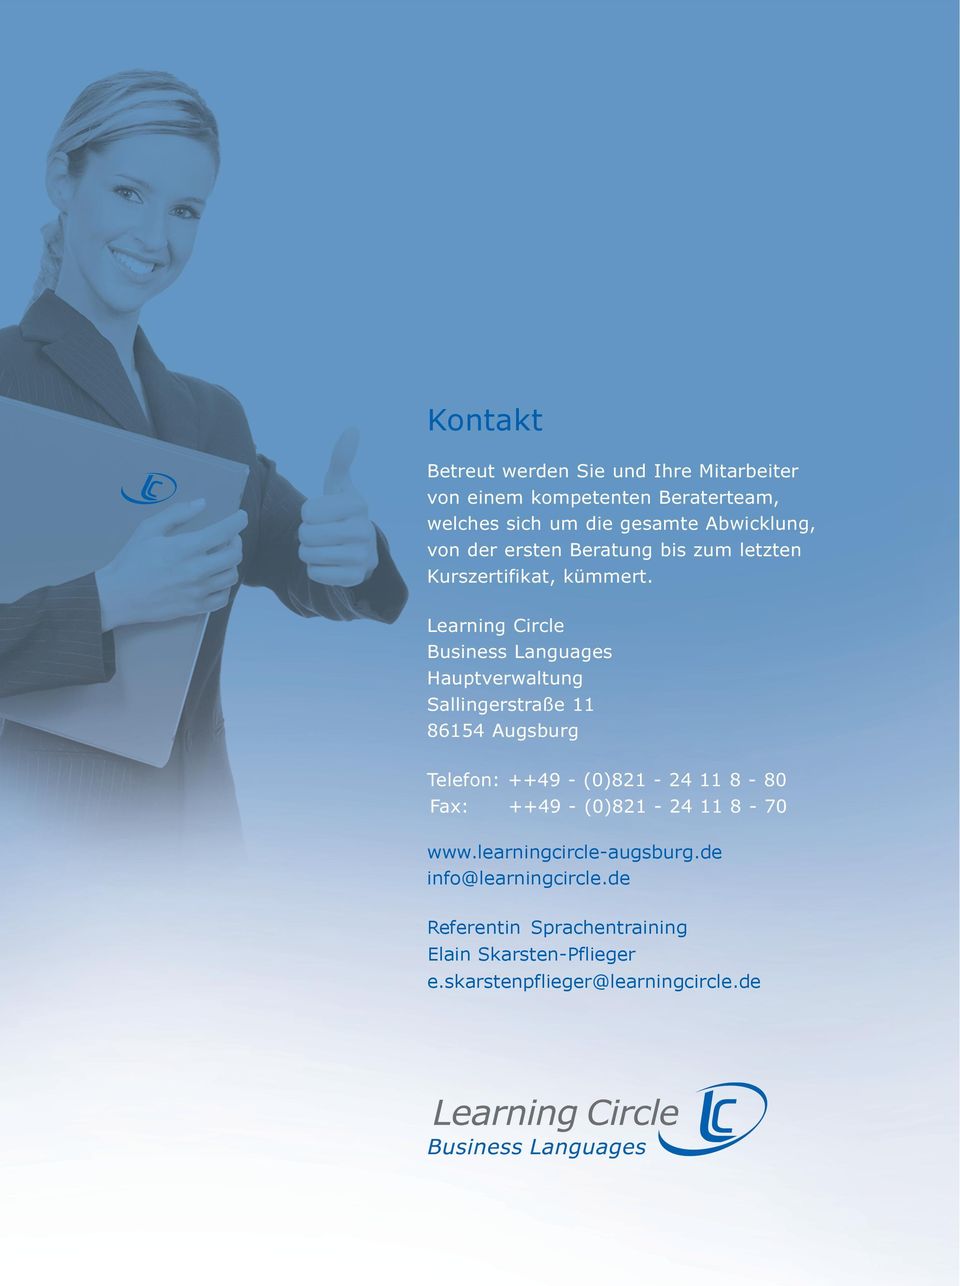 Learning Circle Business Languages Hauptverwaltung Sallingerstraße 11 86154 Augsburg Telefon: ++49 -(0)821-24118-80